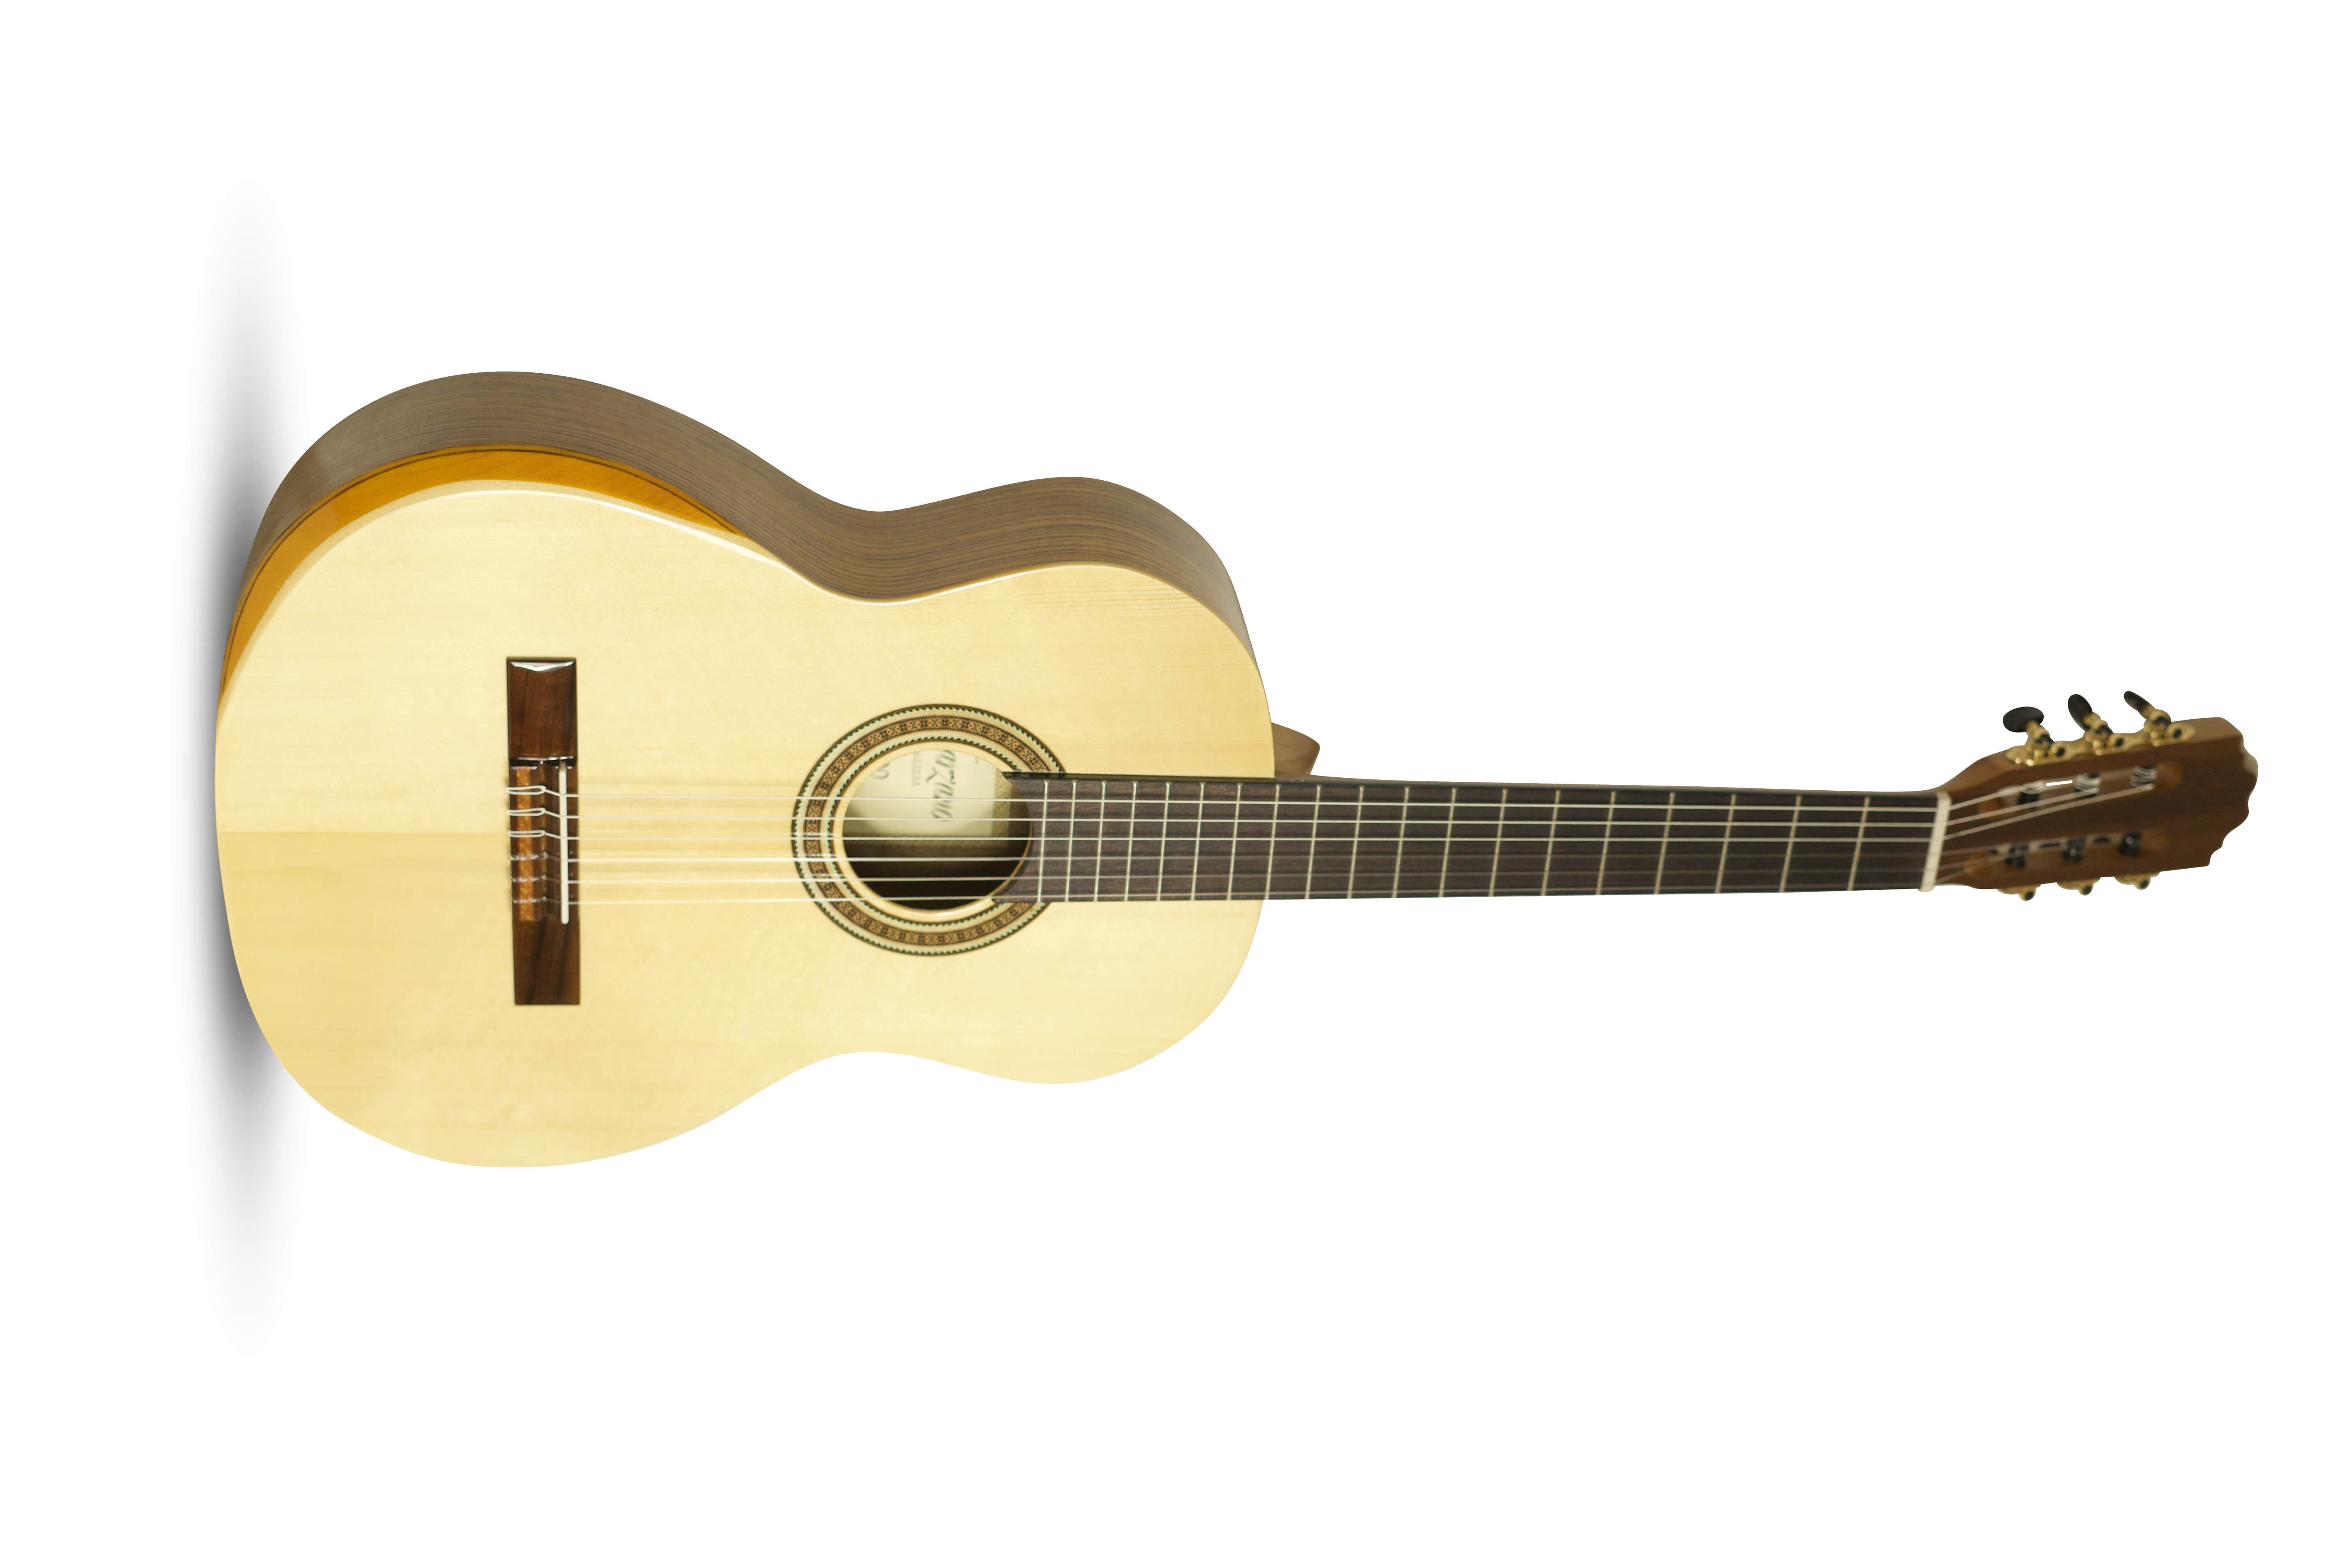 Marzano GDR-200 classical guitar